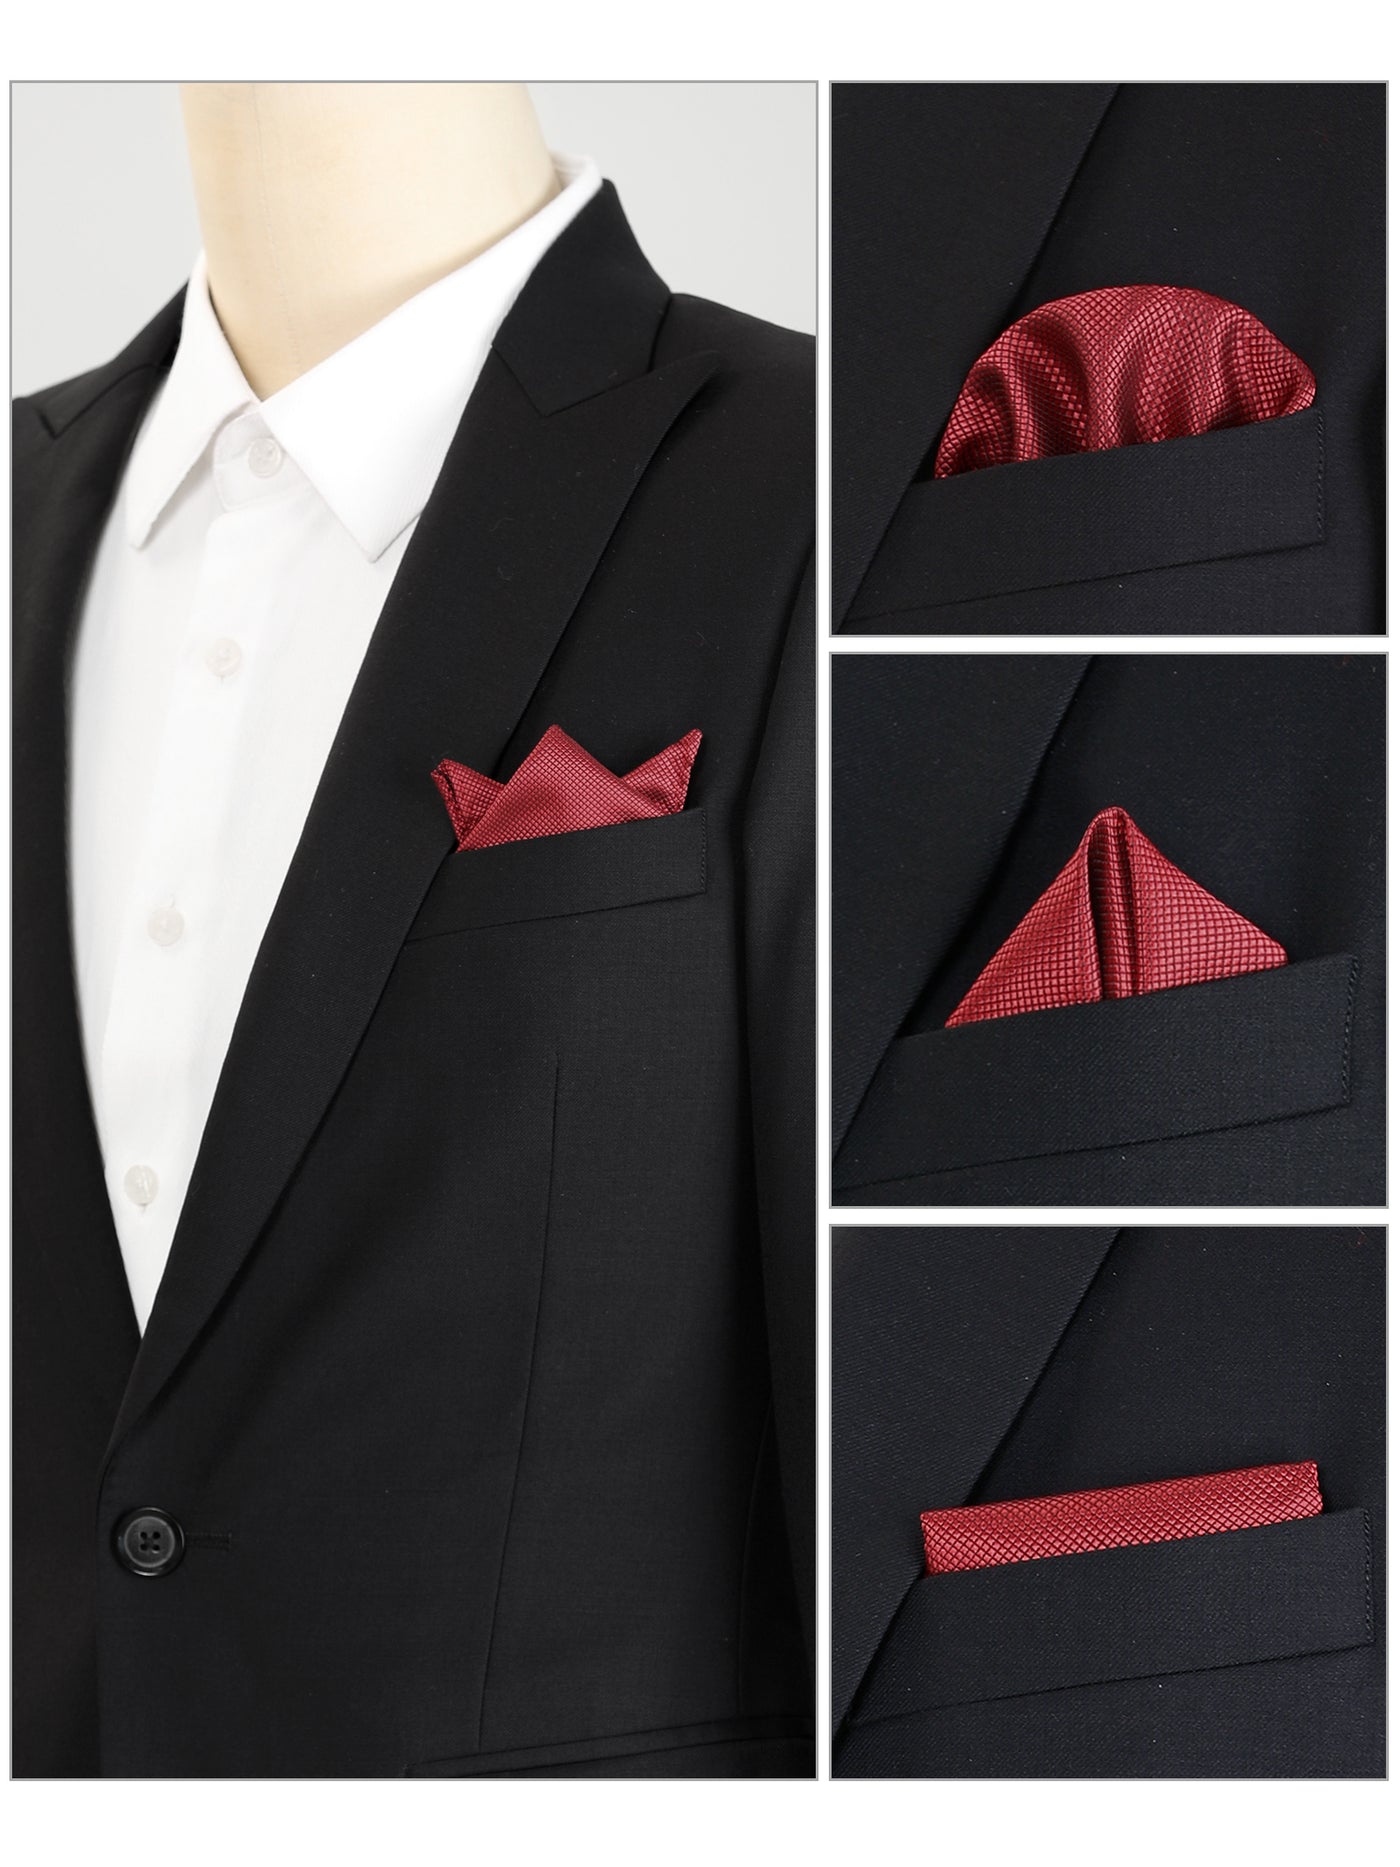 Allegra K Pocket Square Solid Classic Textured Wedding Business Handkerchiefs